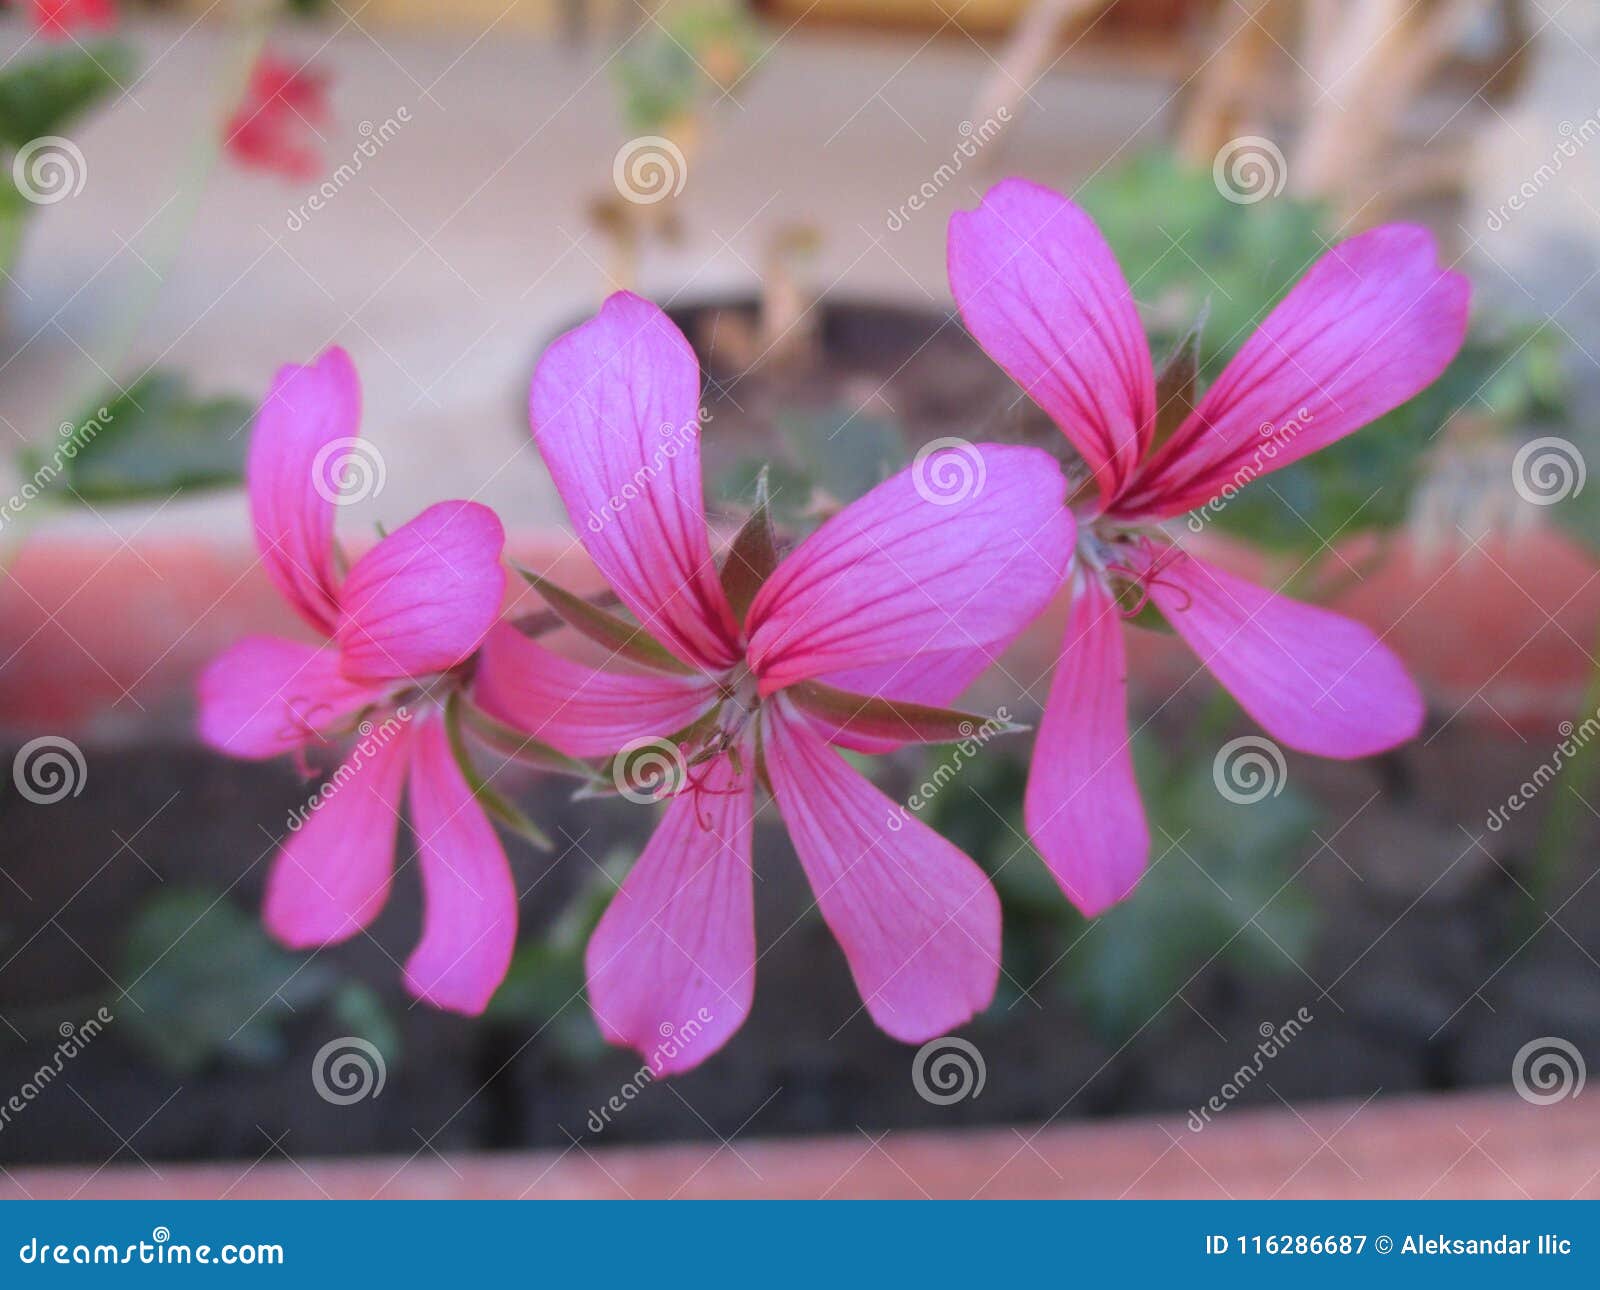 slovene geraniums